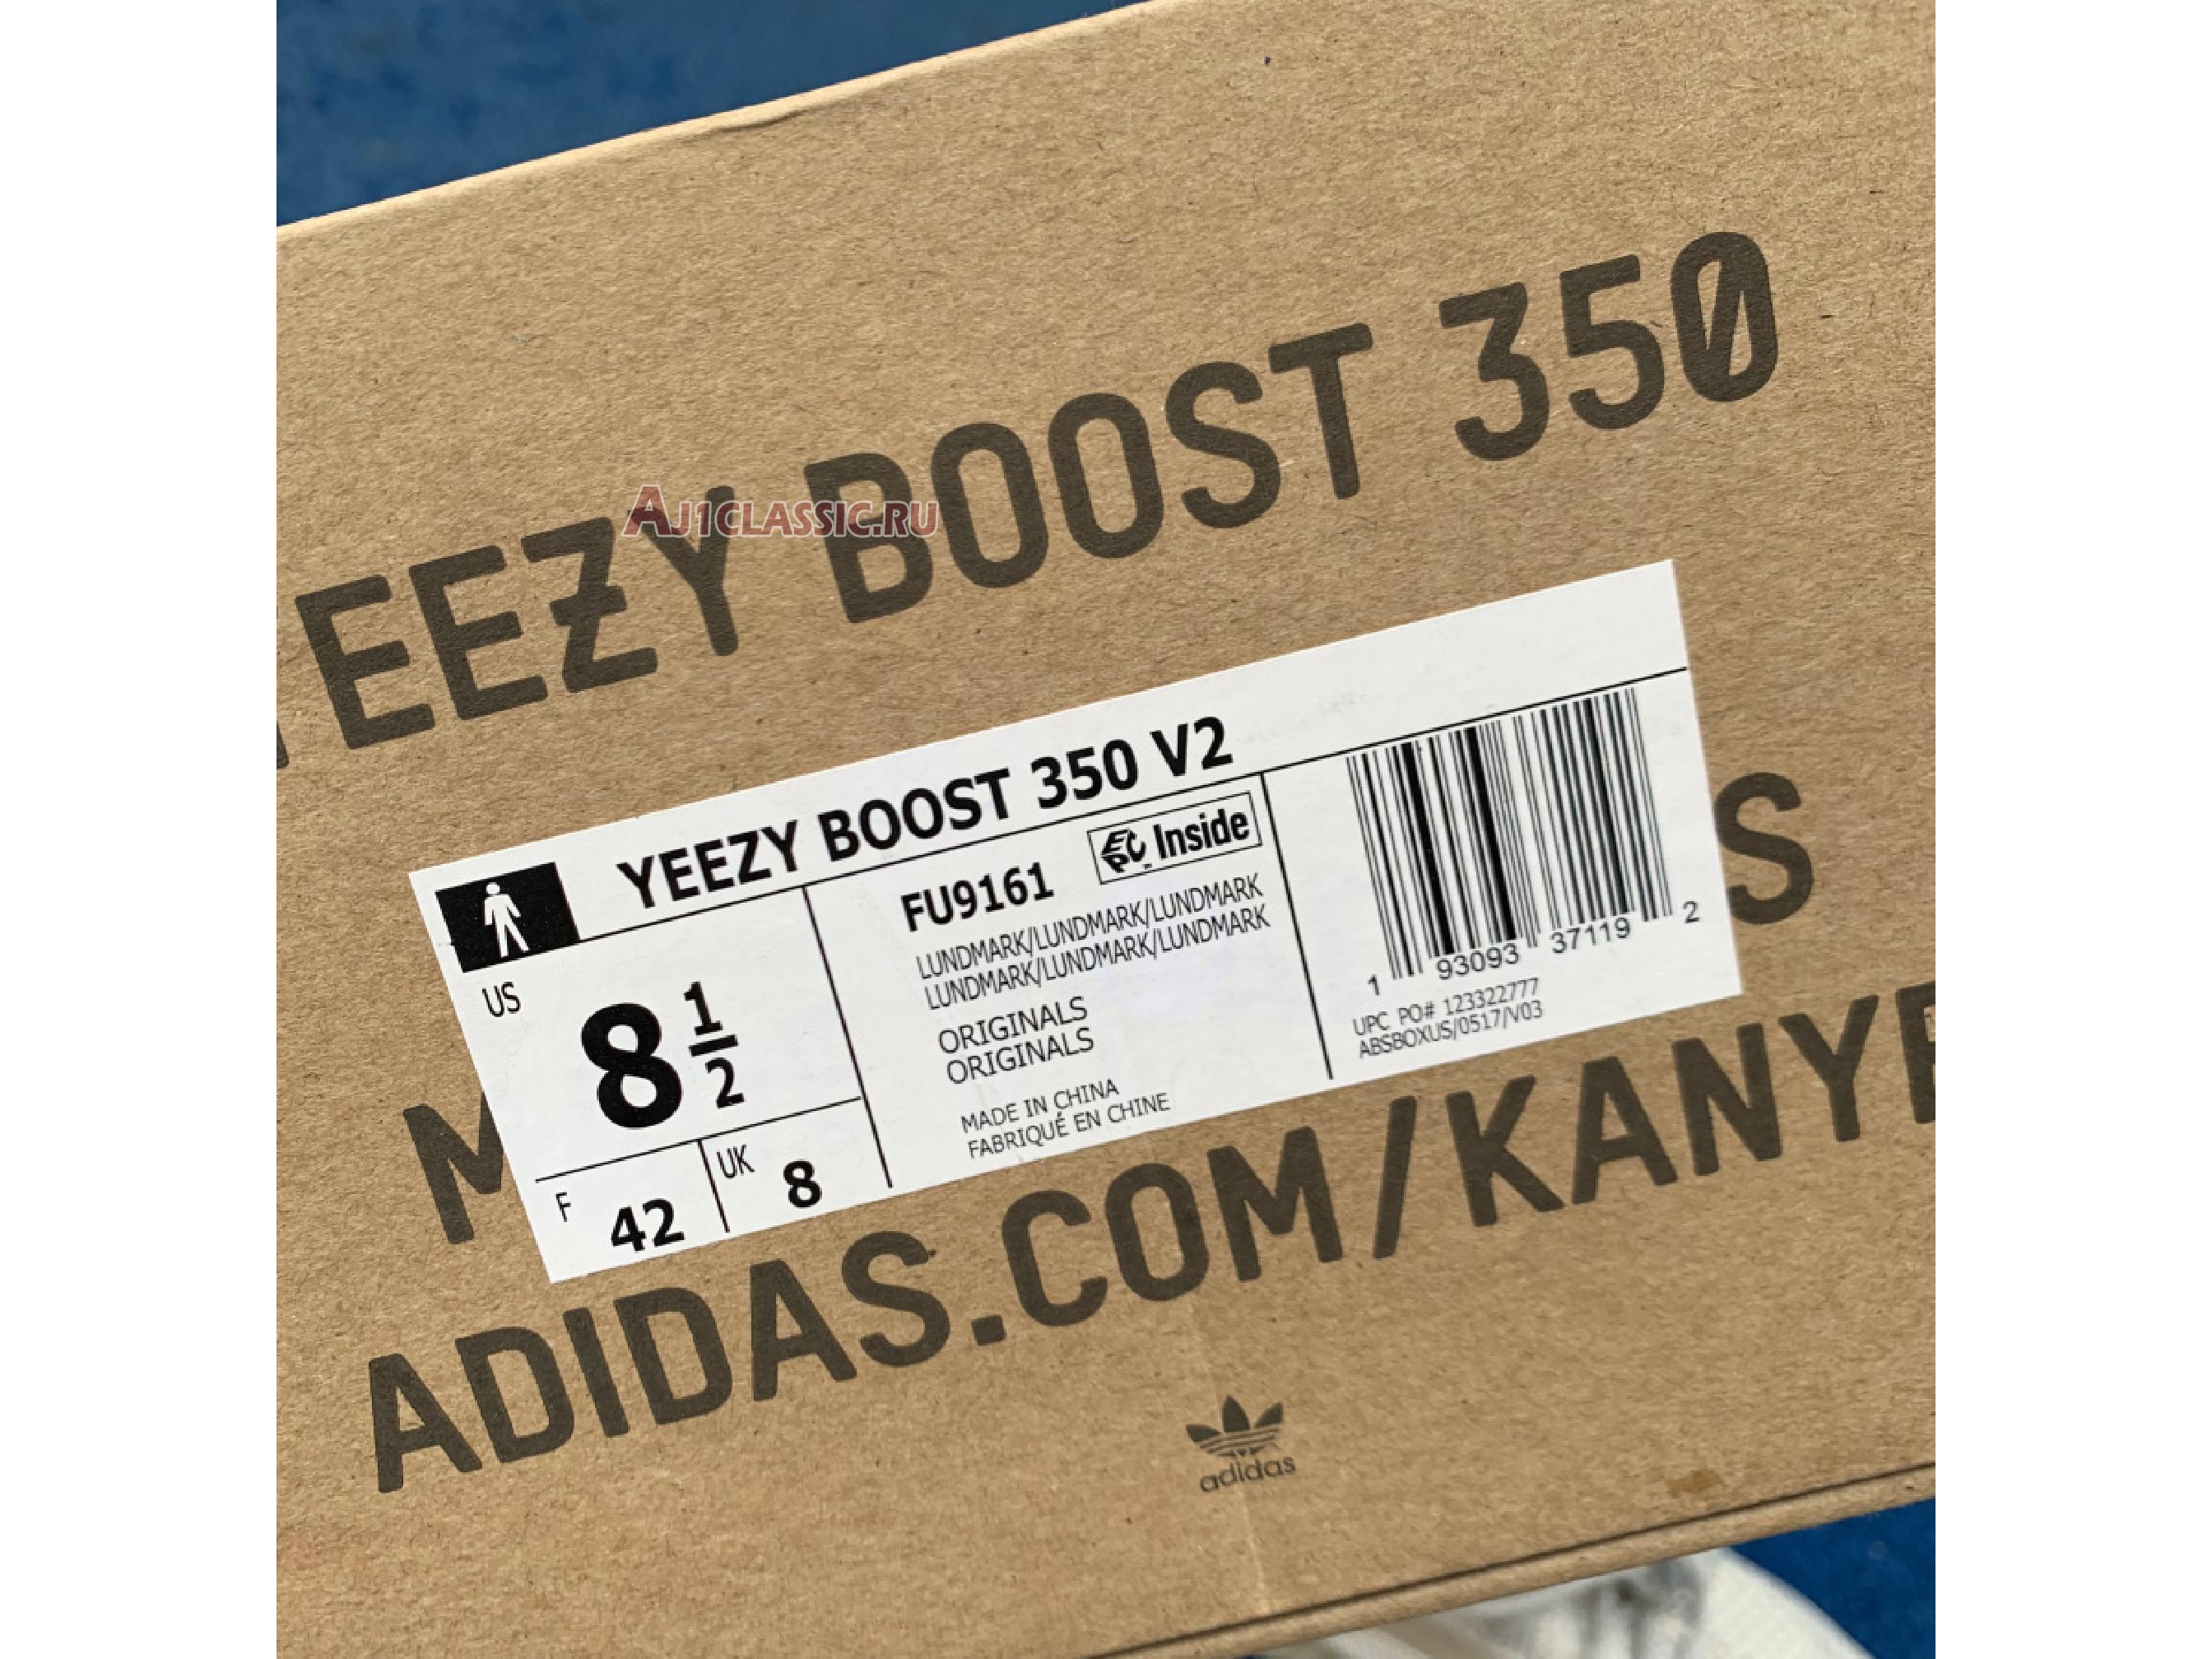 Adidas Yeezy Boost 350 V2 "Lundmark Non-Reflective" FU9161